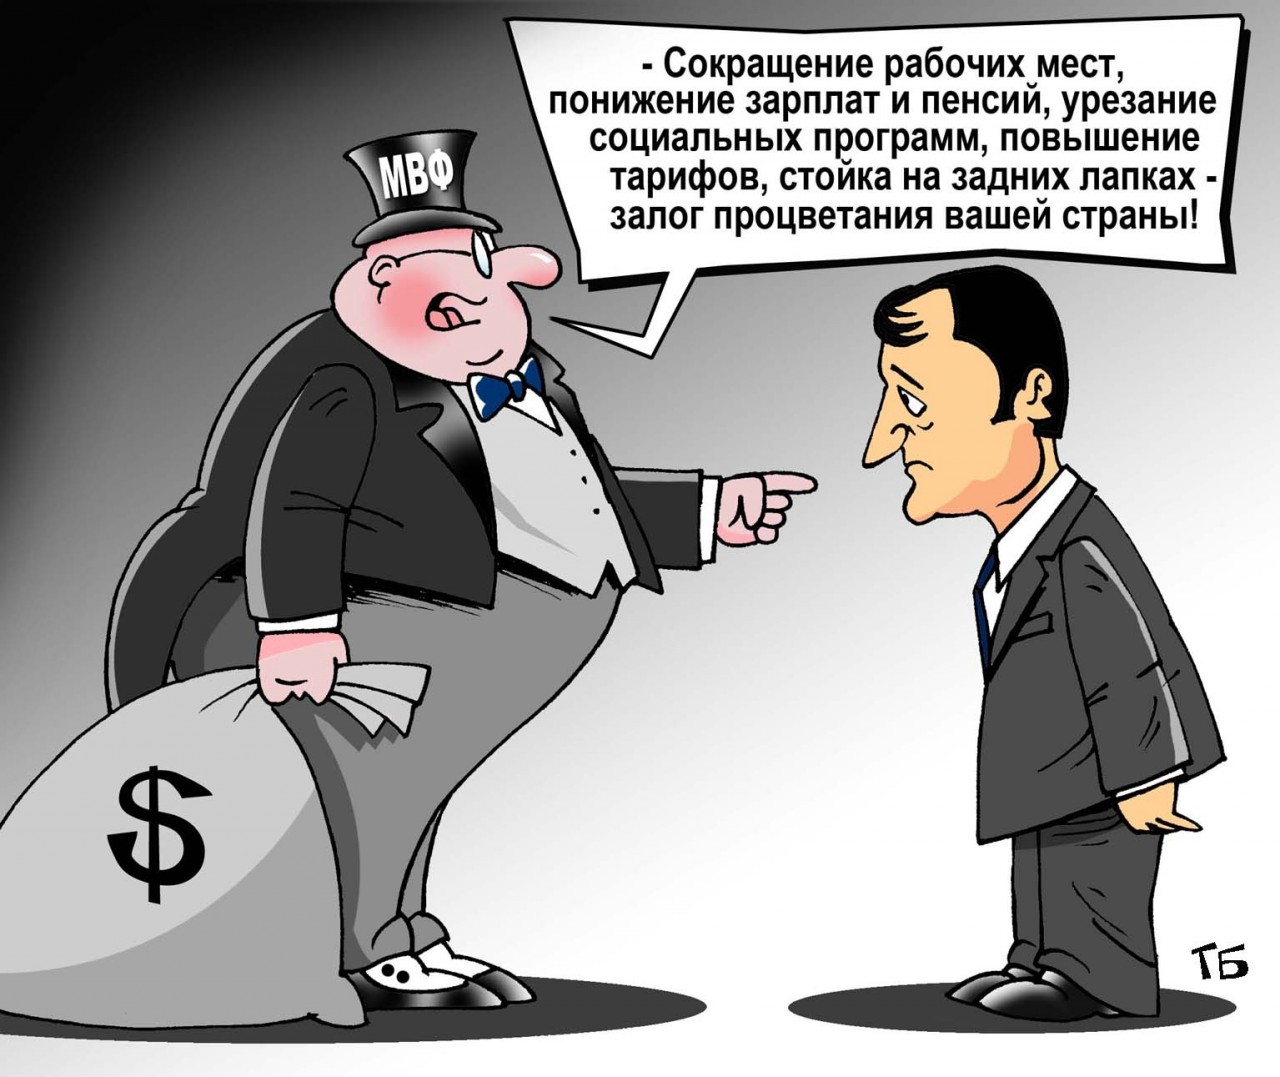 Мвф цб. Международный валютный фонд карикатуры. МВФ карикатура. Украина и МВФ карикатуры. МВФ прикол.